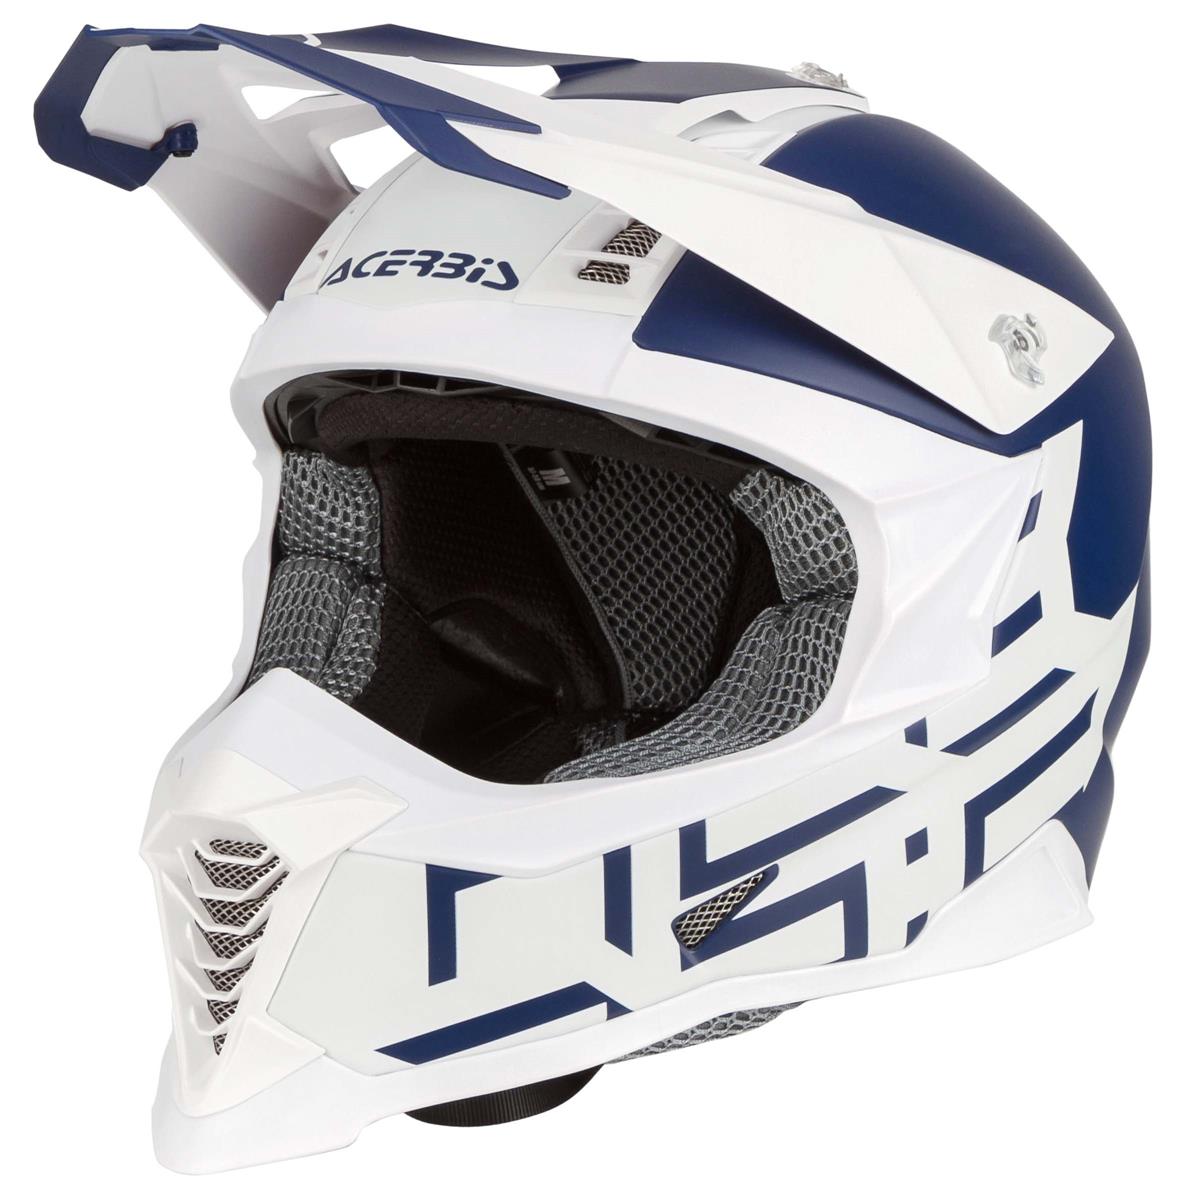 Acerbis Motocross-Helm Impact X-Racer VTR Weiß/Blau